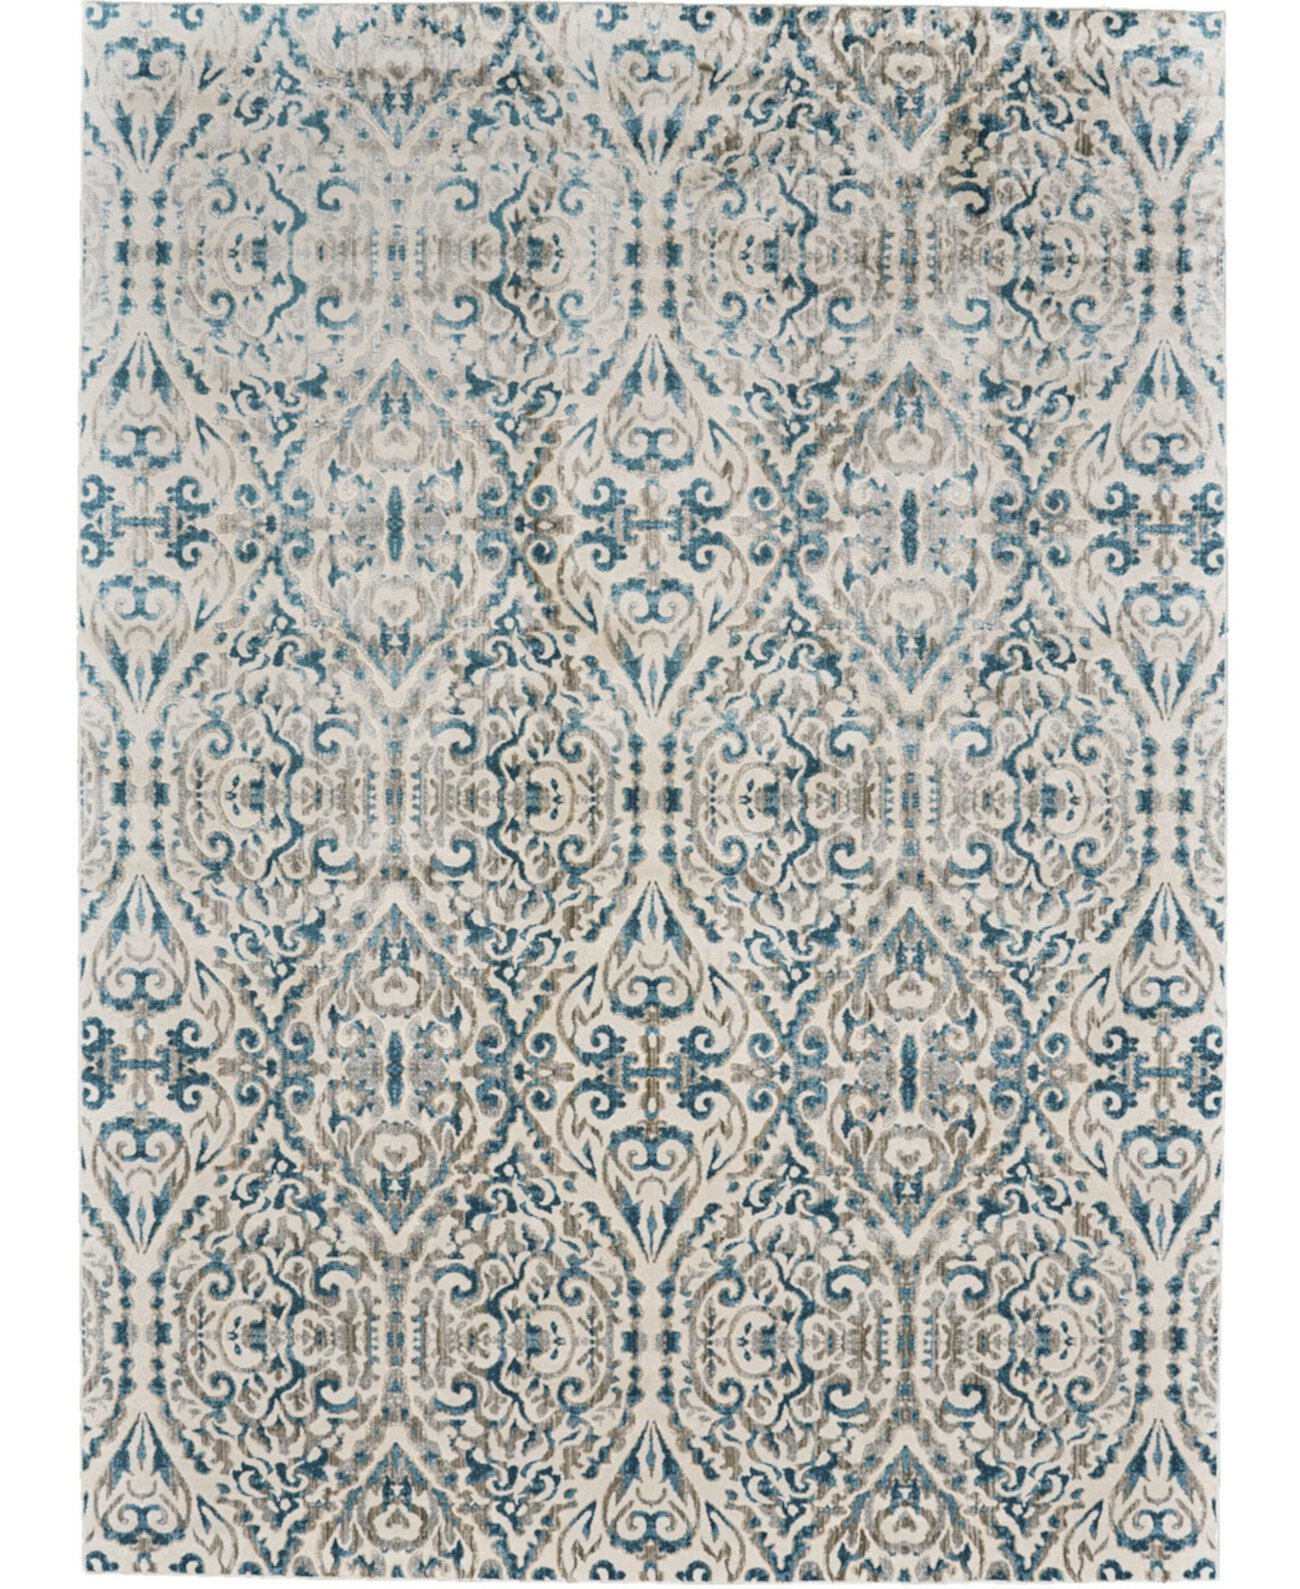 Keats R3466 Бирюзовый коврик размером 2 х 4 фута Feizy